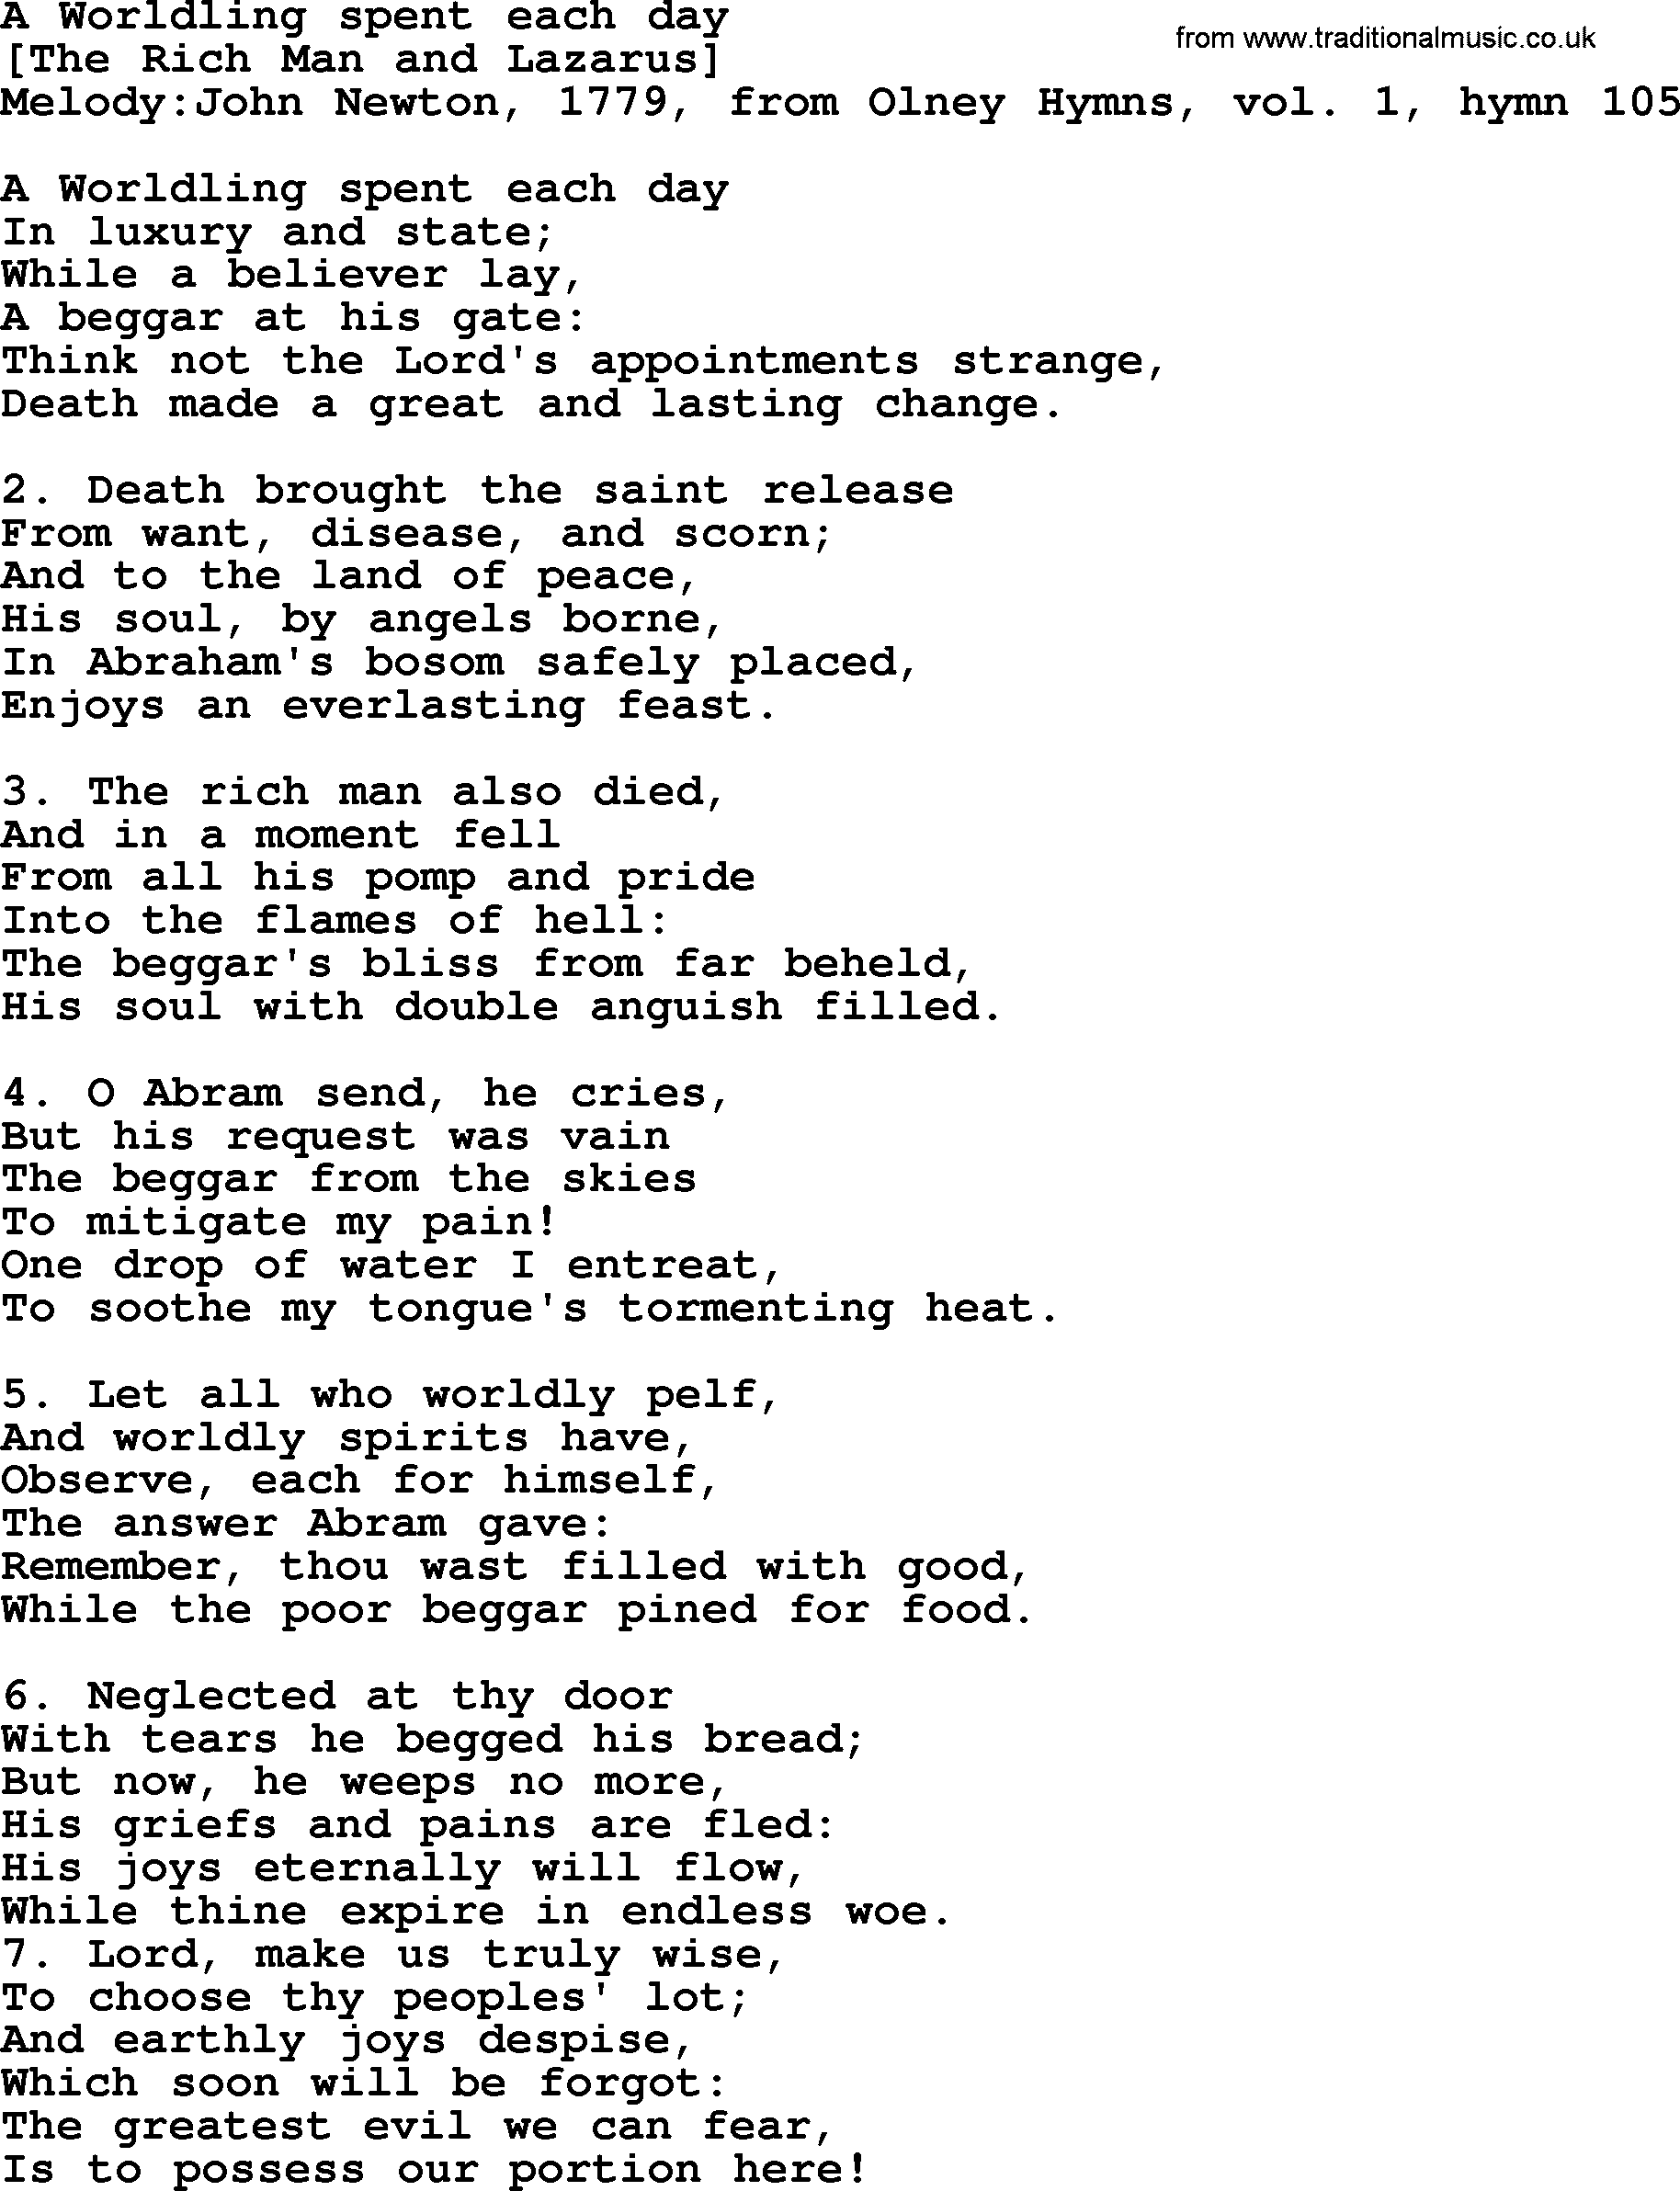 Old English Song: A Worldling Spent Each Day lyrics